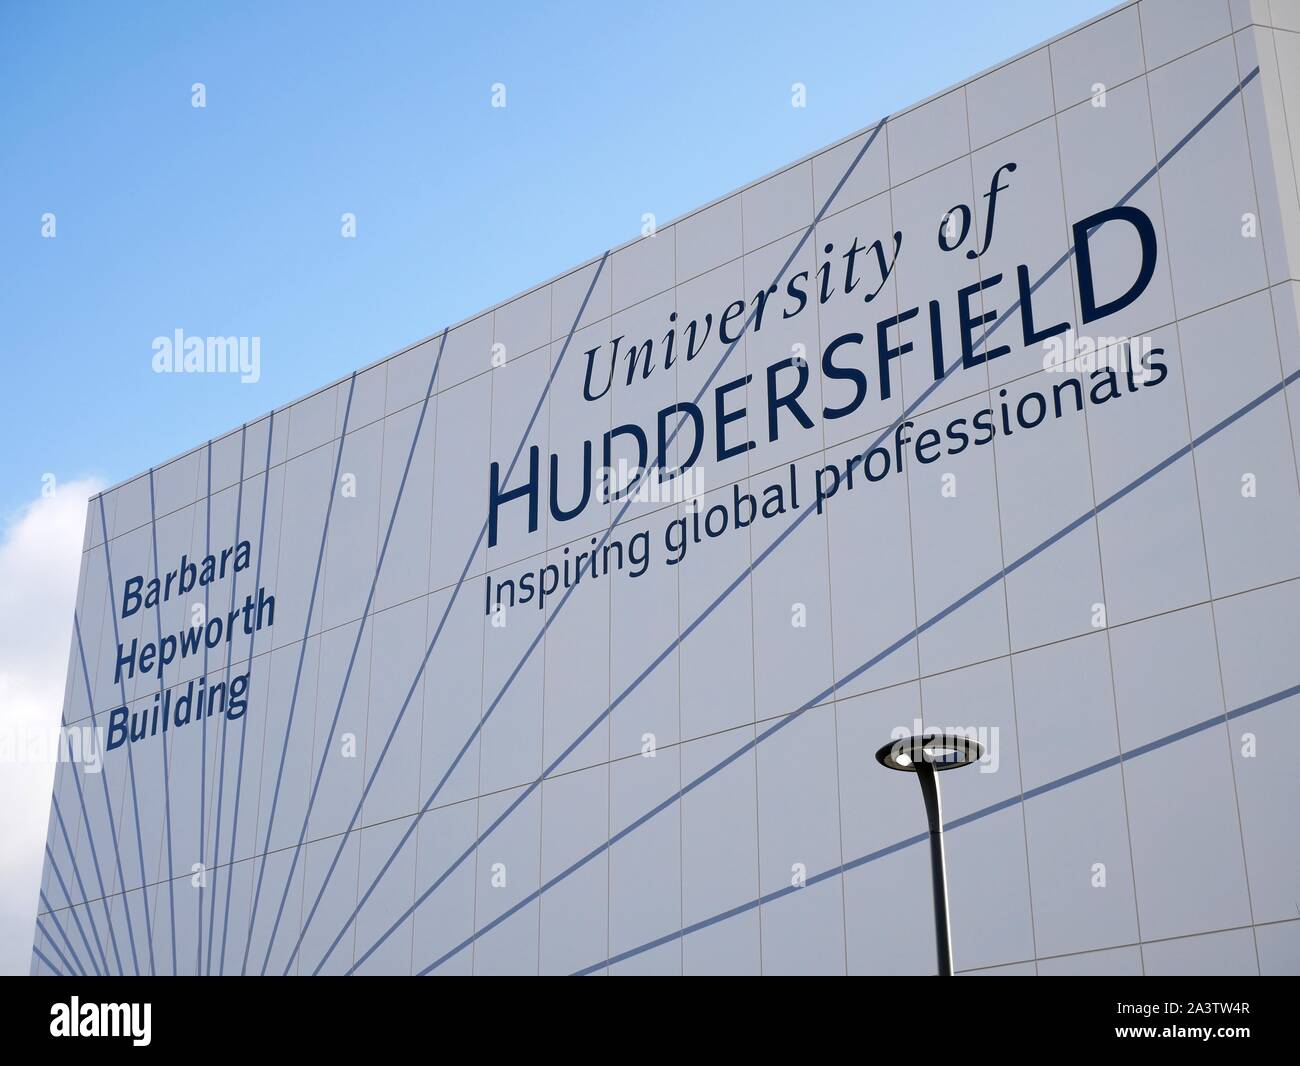 Le Barbarb Hepworth Building à l'Université de Huddersfield Inspiring Global Professionals Yorkshire Angleterre Banque D'Images